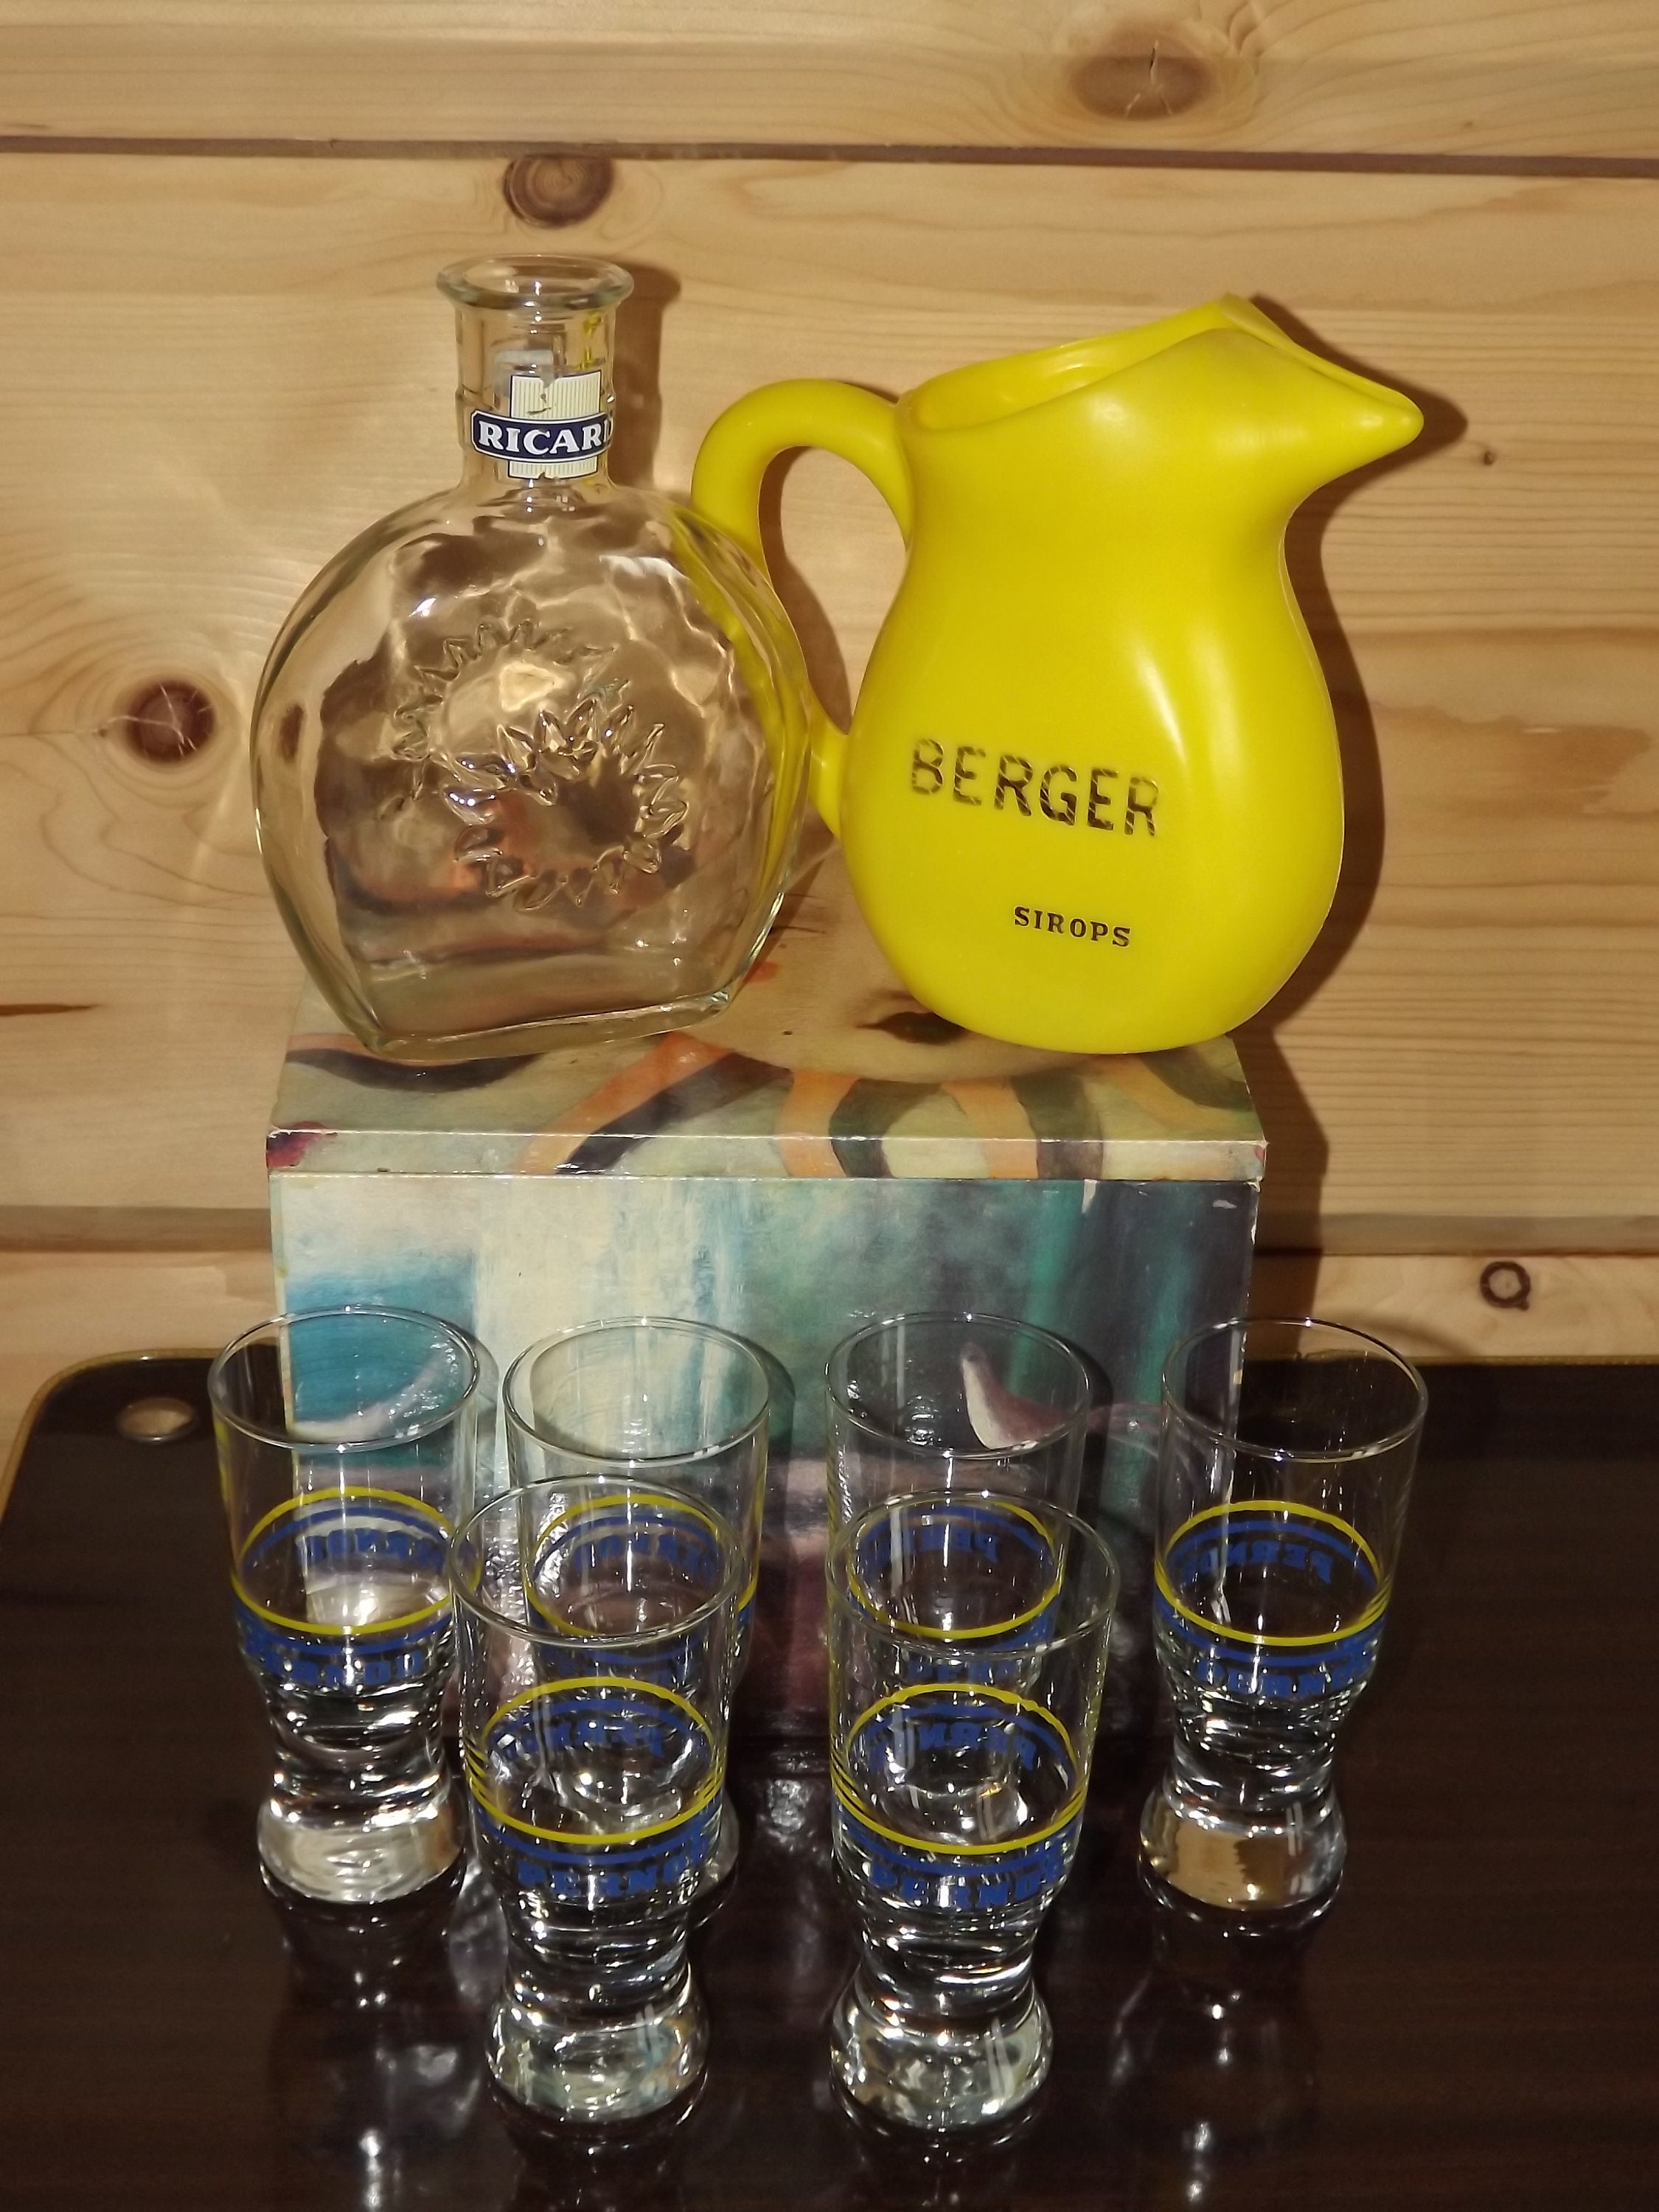 Set de Français Anis Liquor Drink - 6 Verres Pernod Berger Yellow Plastic Pitcher Ricard Glass Sun B